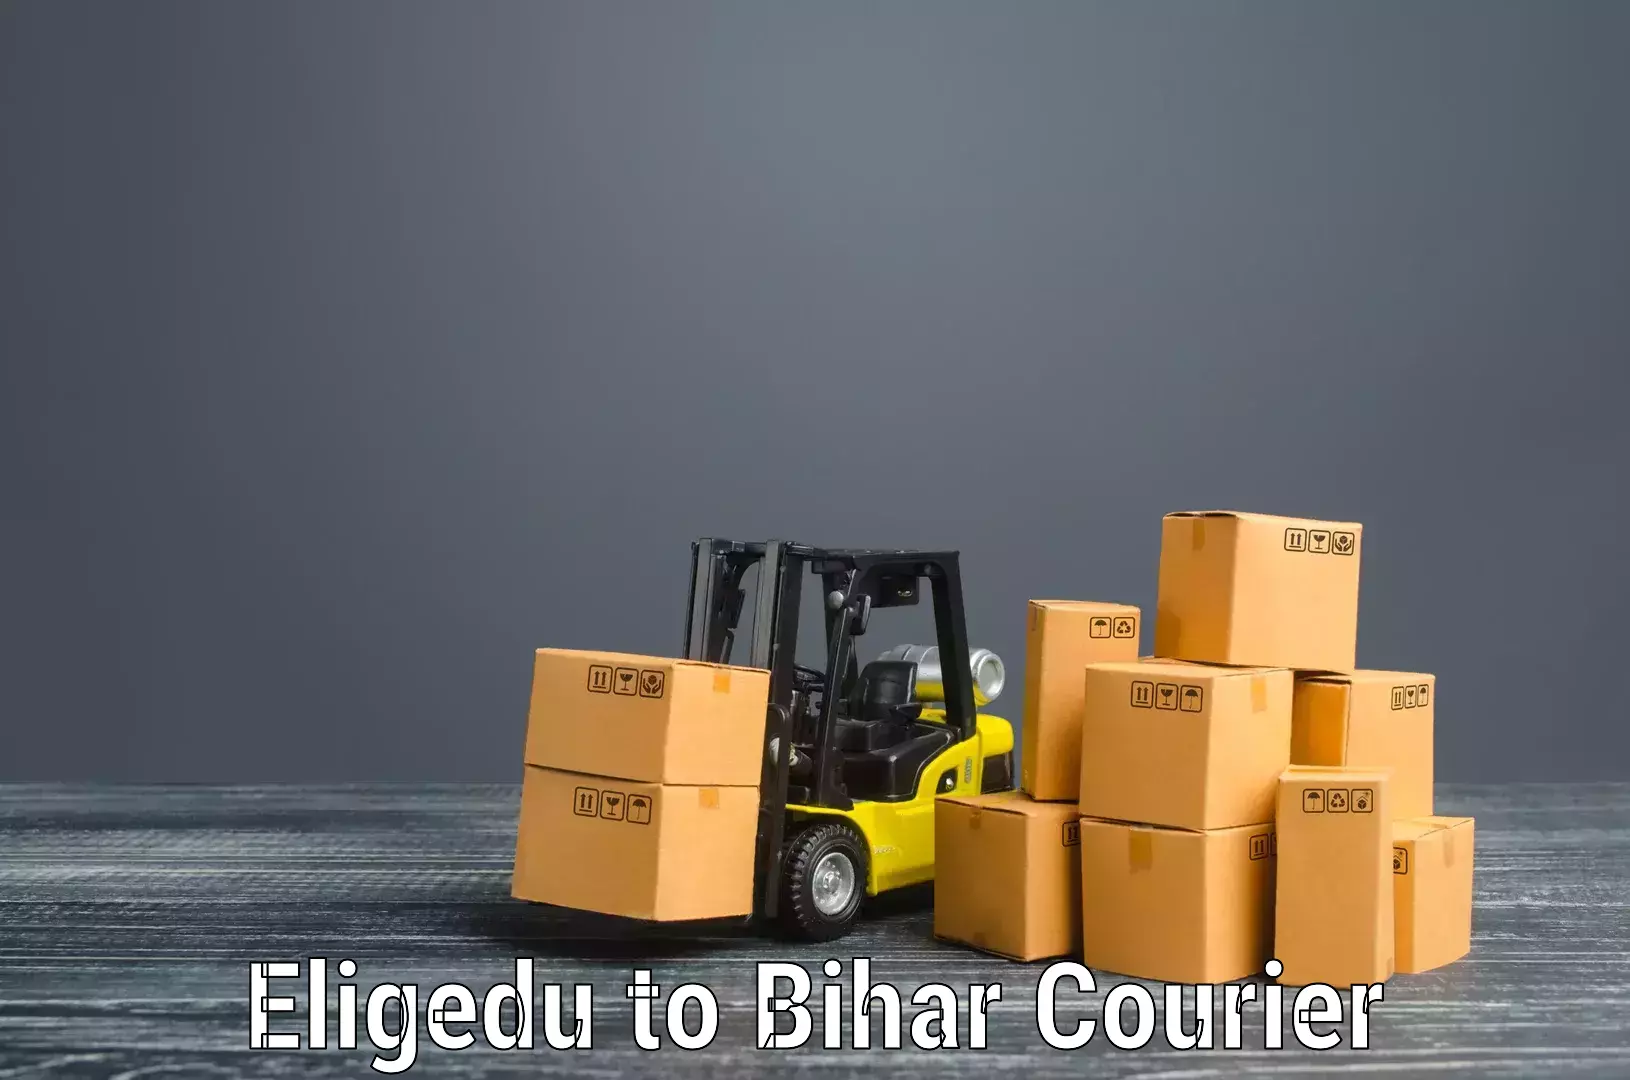 Household goods transport service Eligedu to Barh